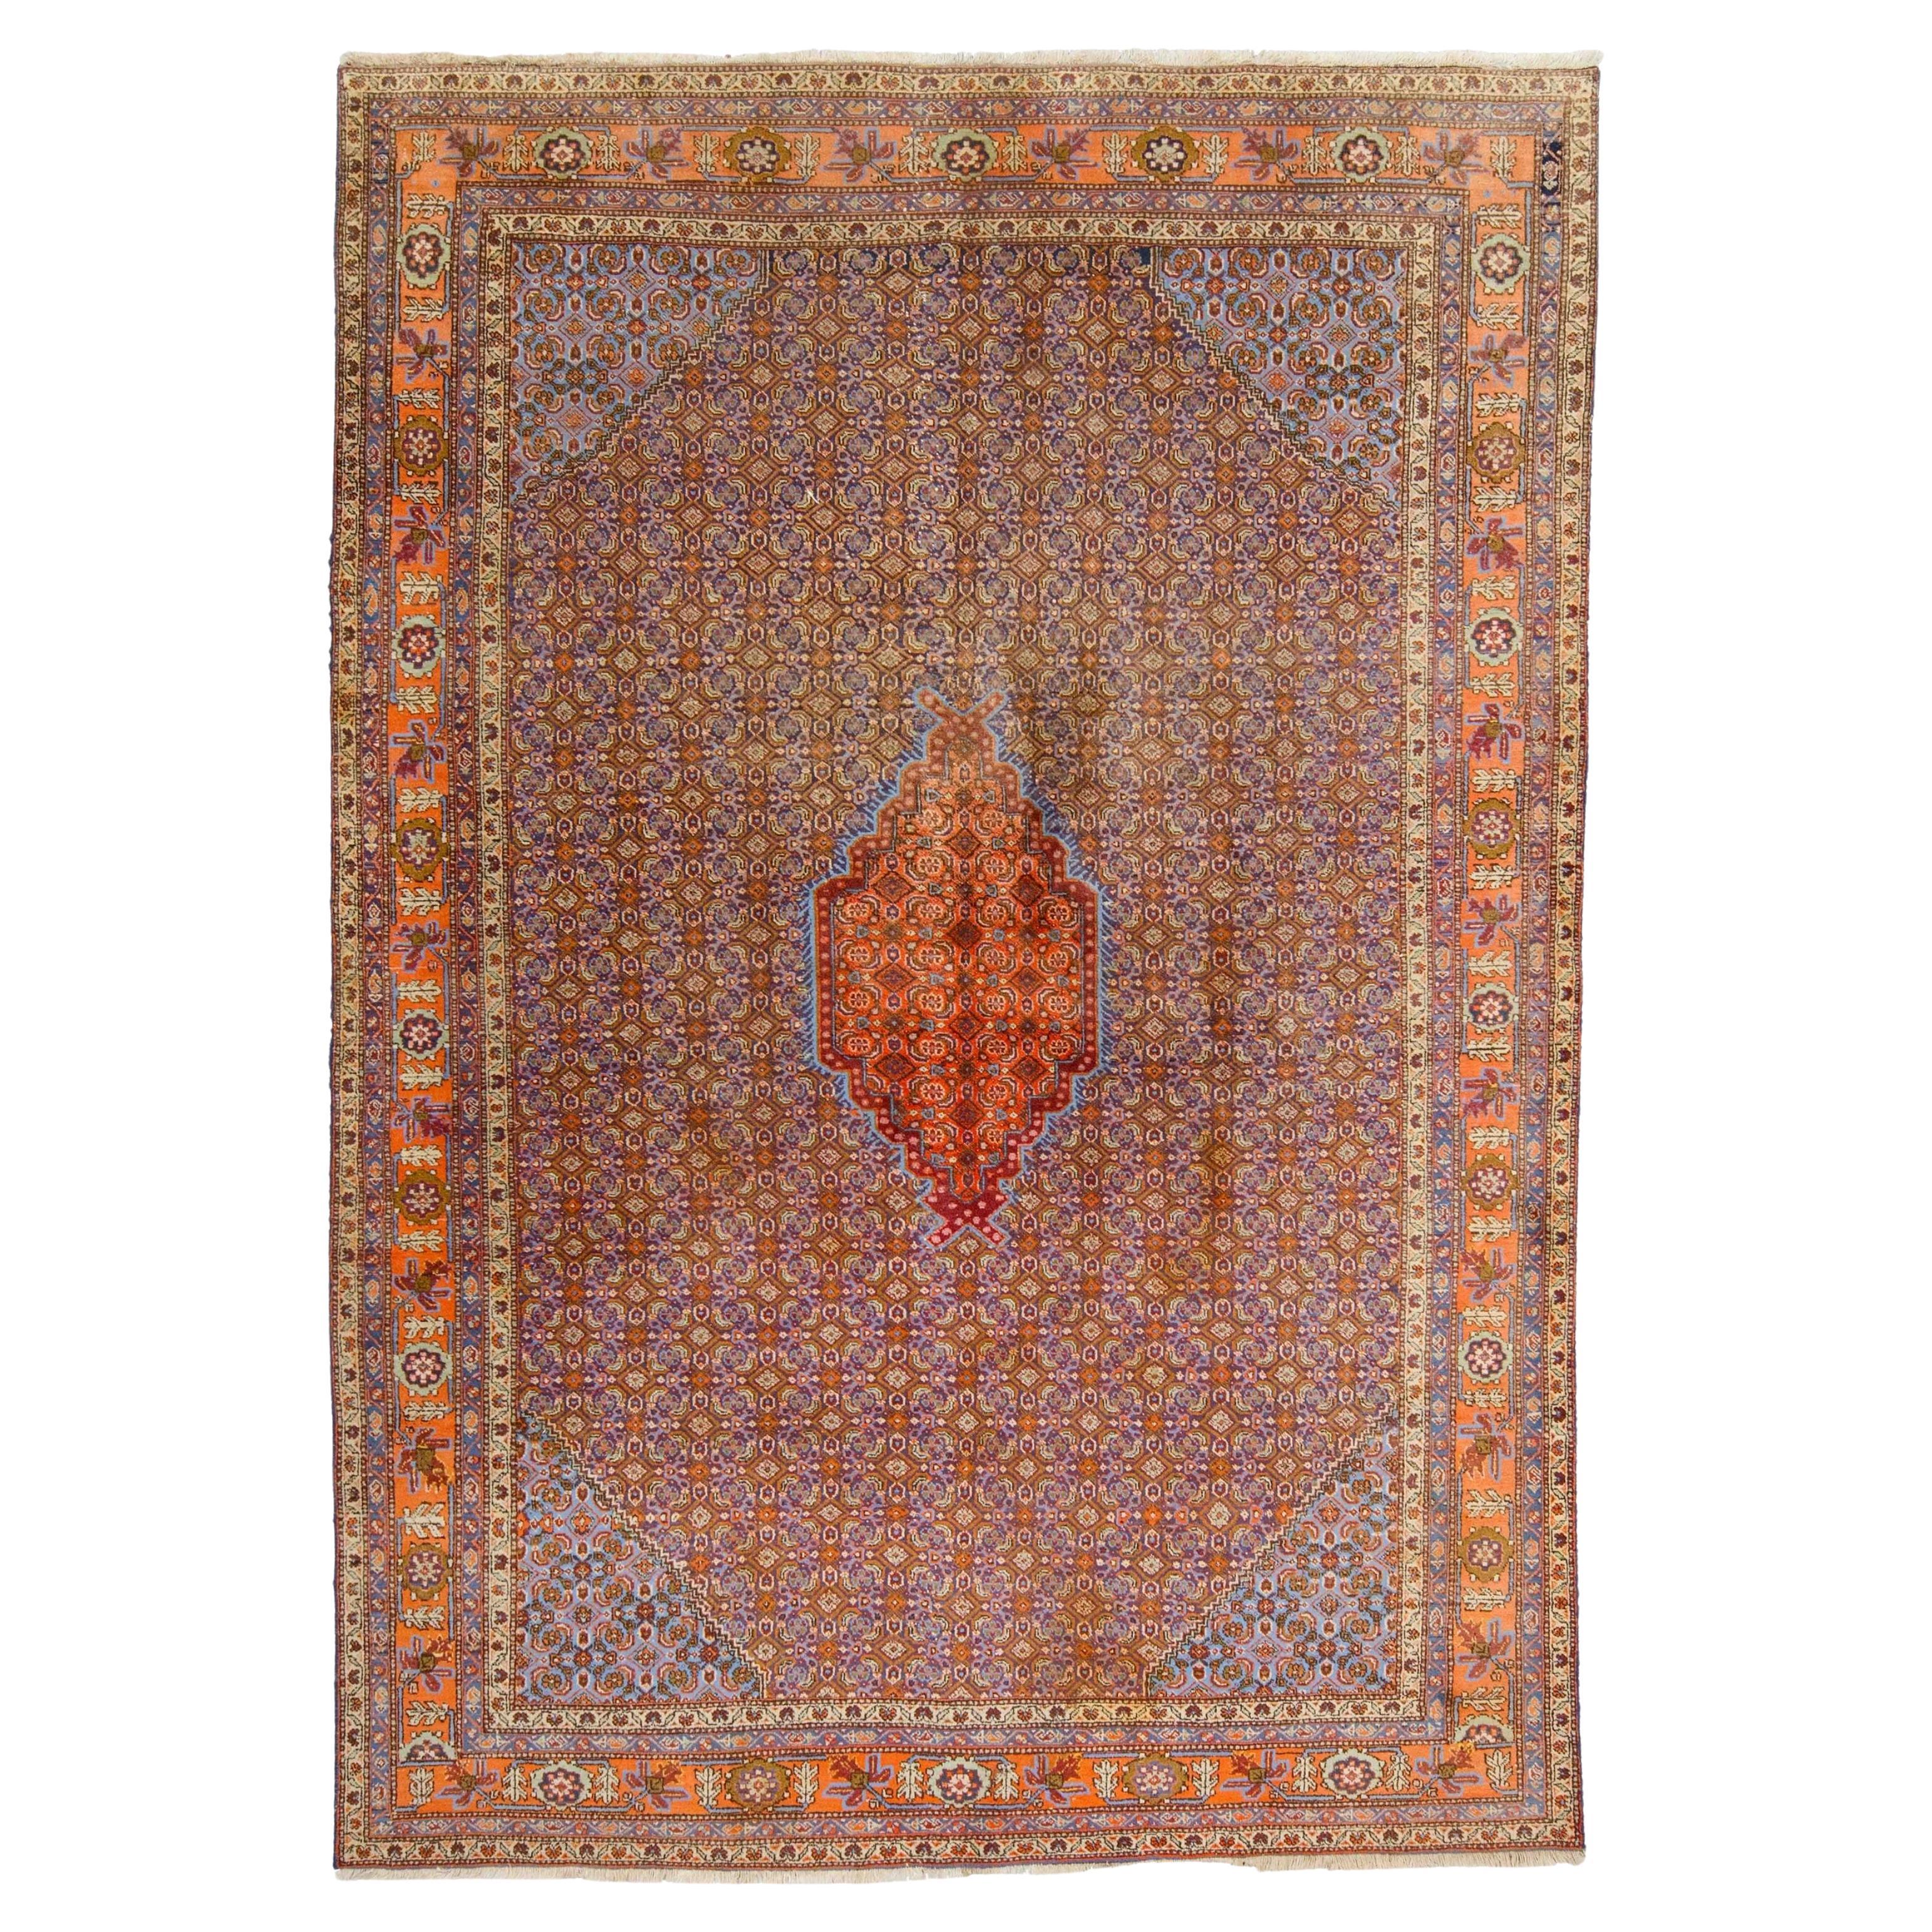 Antique Tabriz Rug - Late of 19th Century Azerbaijan Tabriz Rug, Antique Carpet For Sale